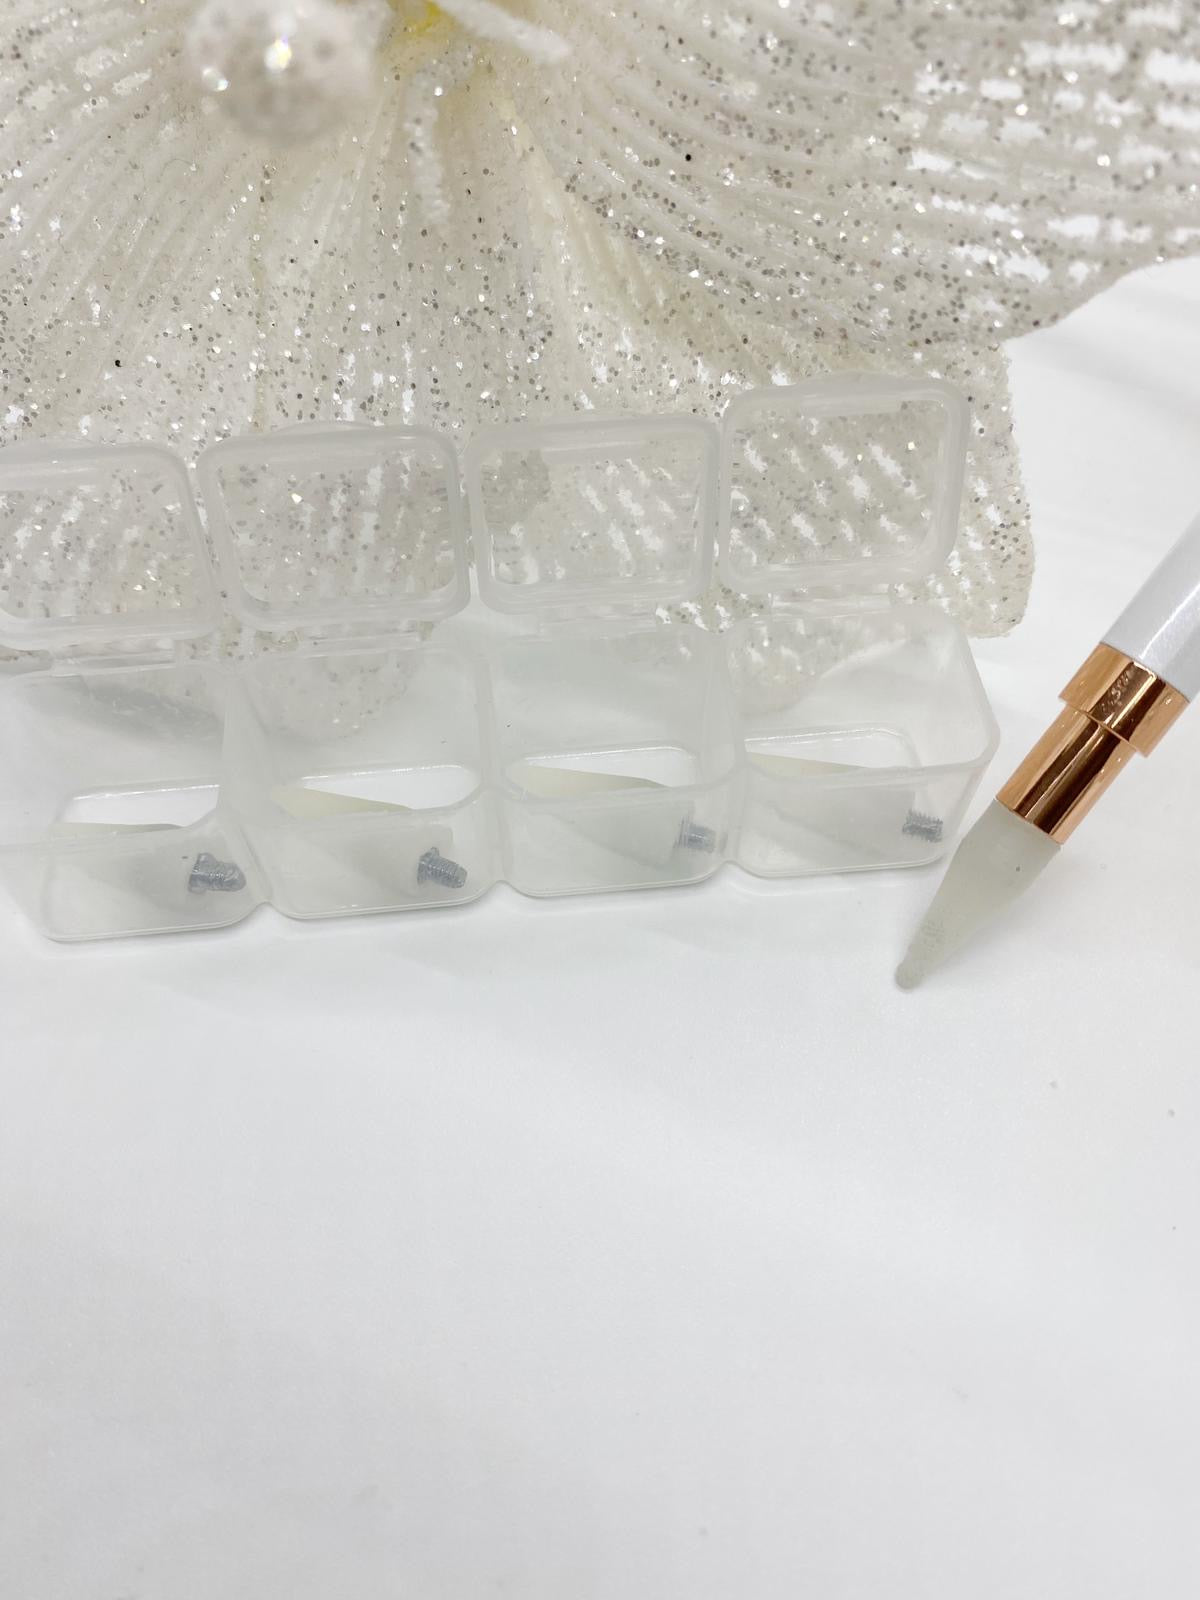 Repuestos de Lapiz para Cristales / Dotting Pen Wax Replacement